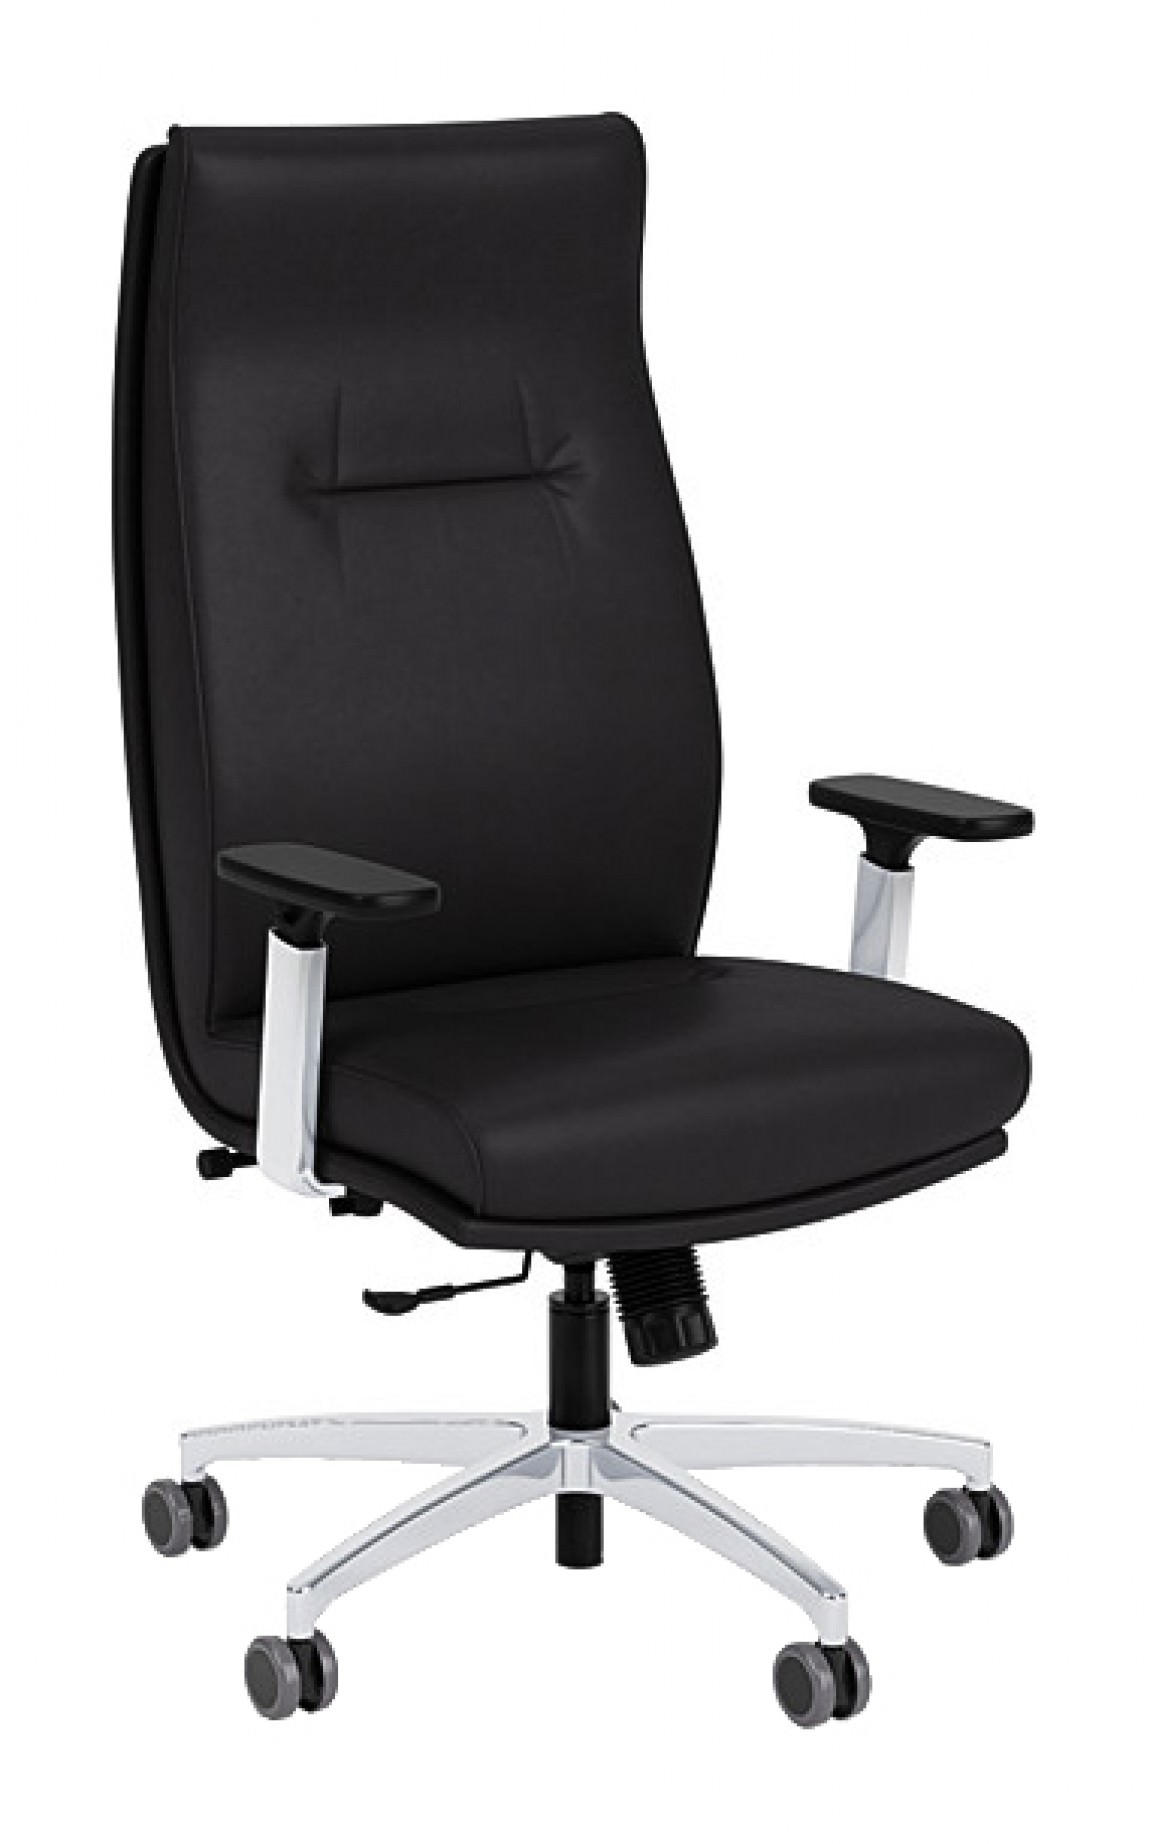 https://madisonliquidators.com/images/p/1150/29731-high-back-ergonomic-chair-1.jpg